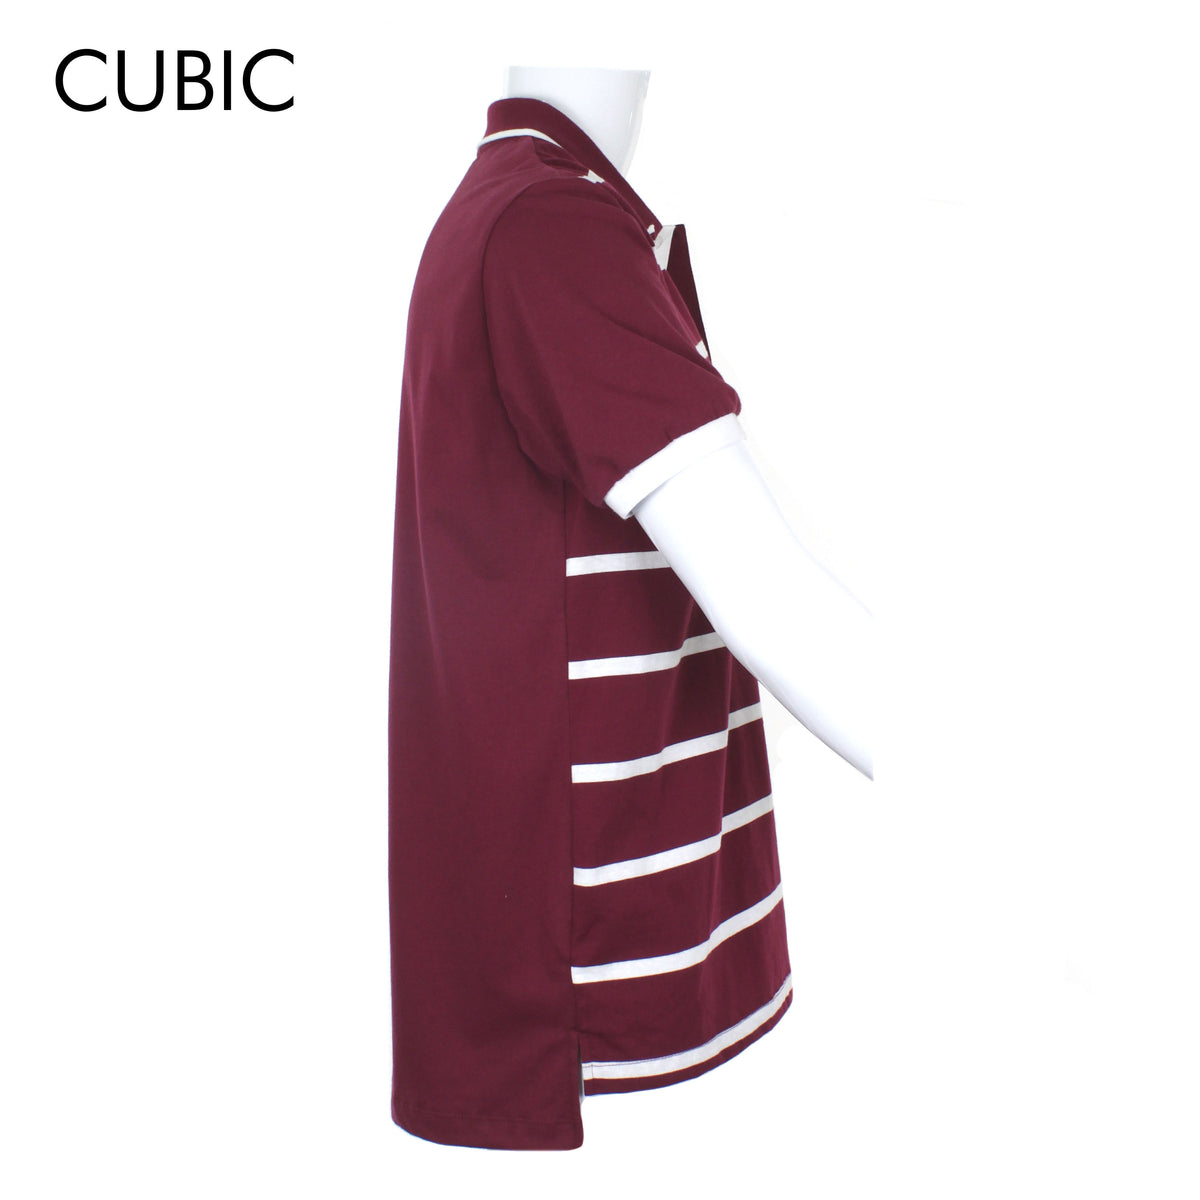 Cubic Mens Stripes  Polo Shirt Polo-shirt Collar Top Top for Men - CMS2326C